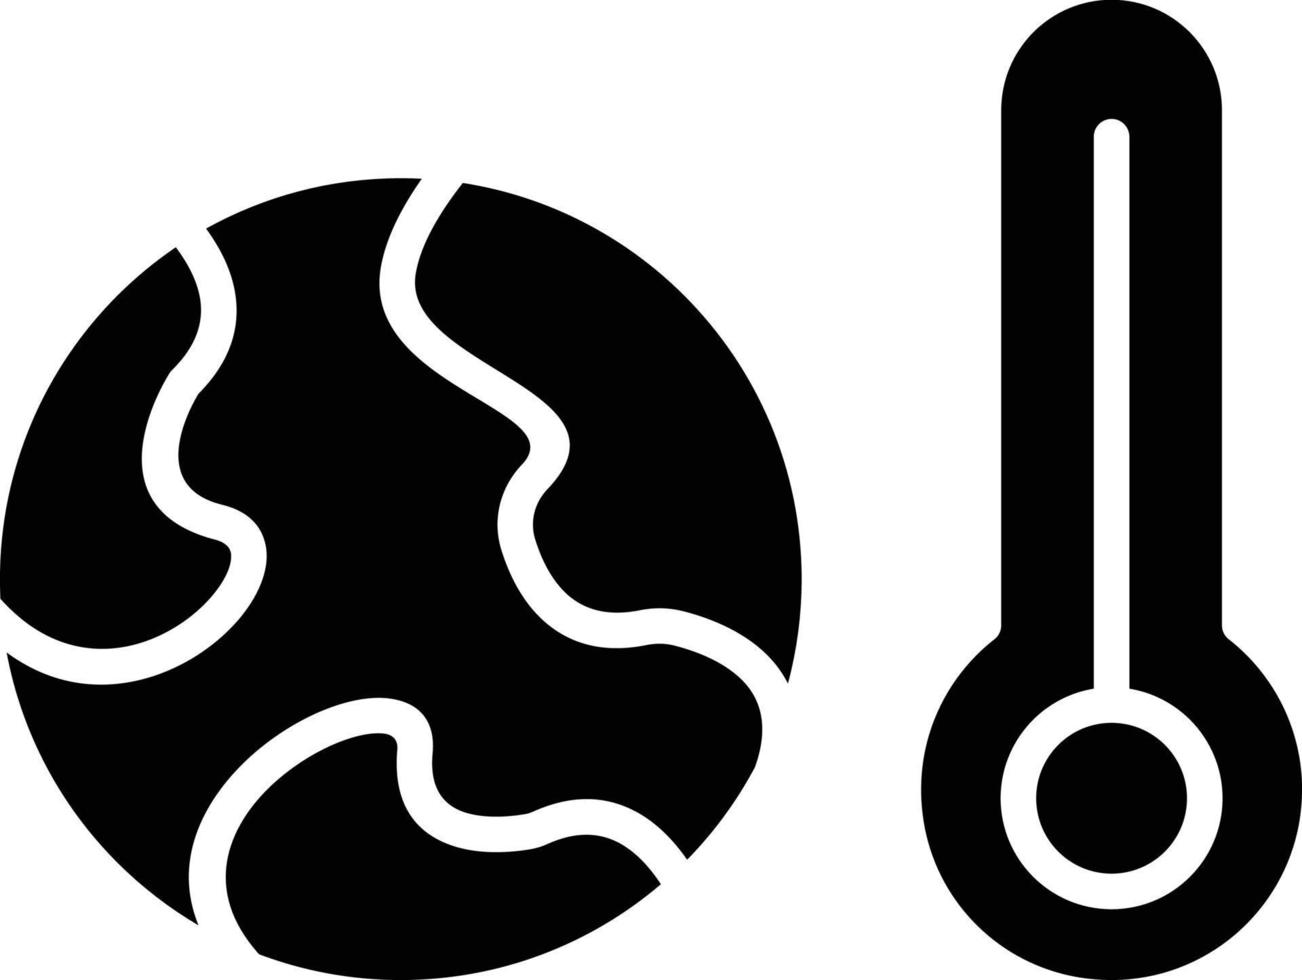 Climate change Vector Icon Design Illustration